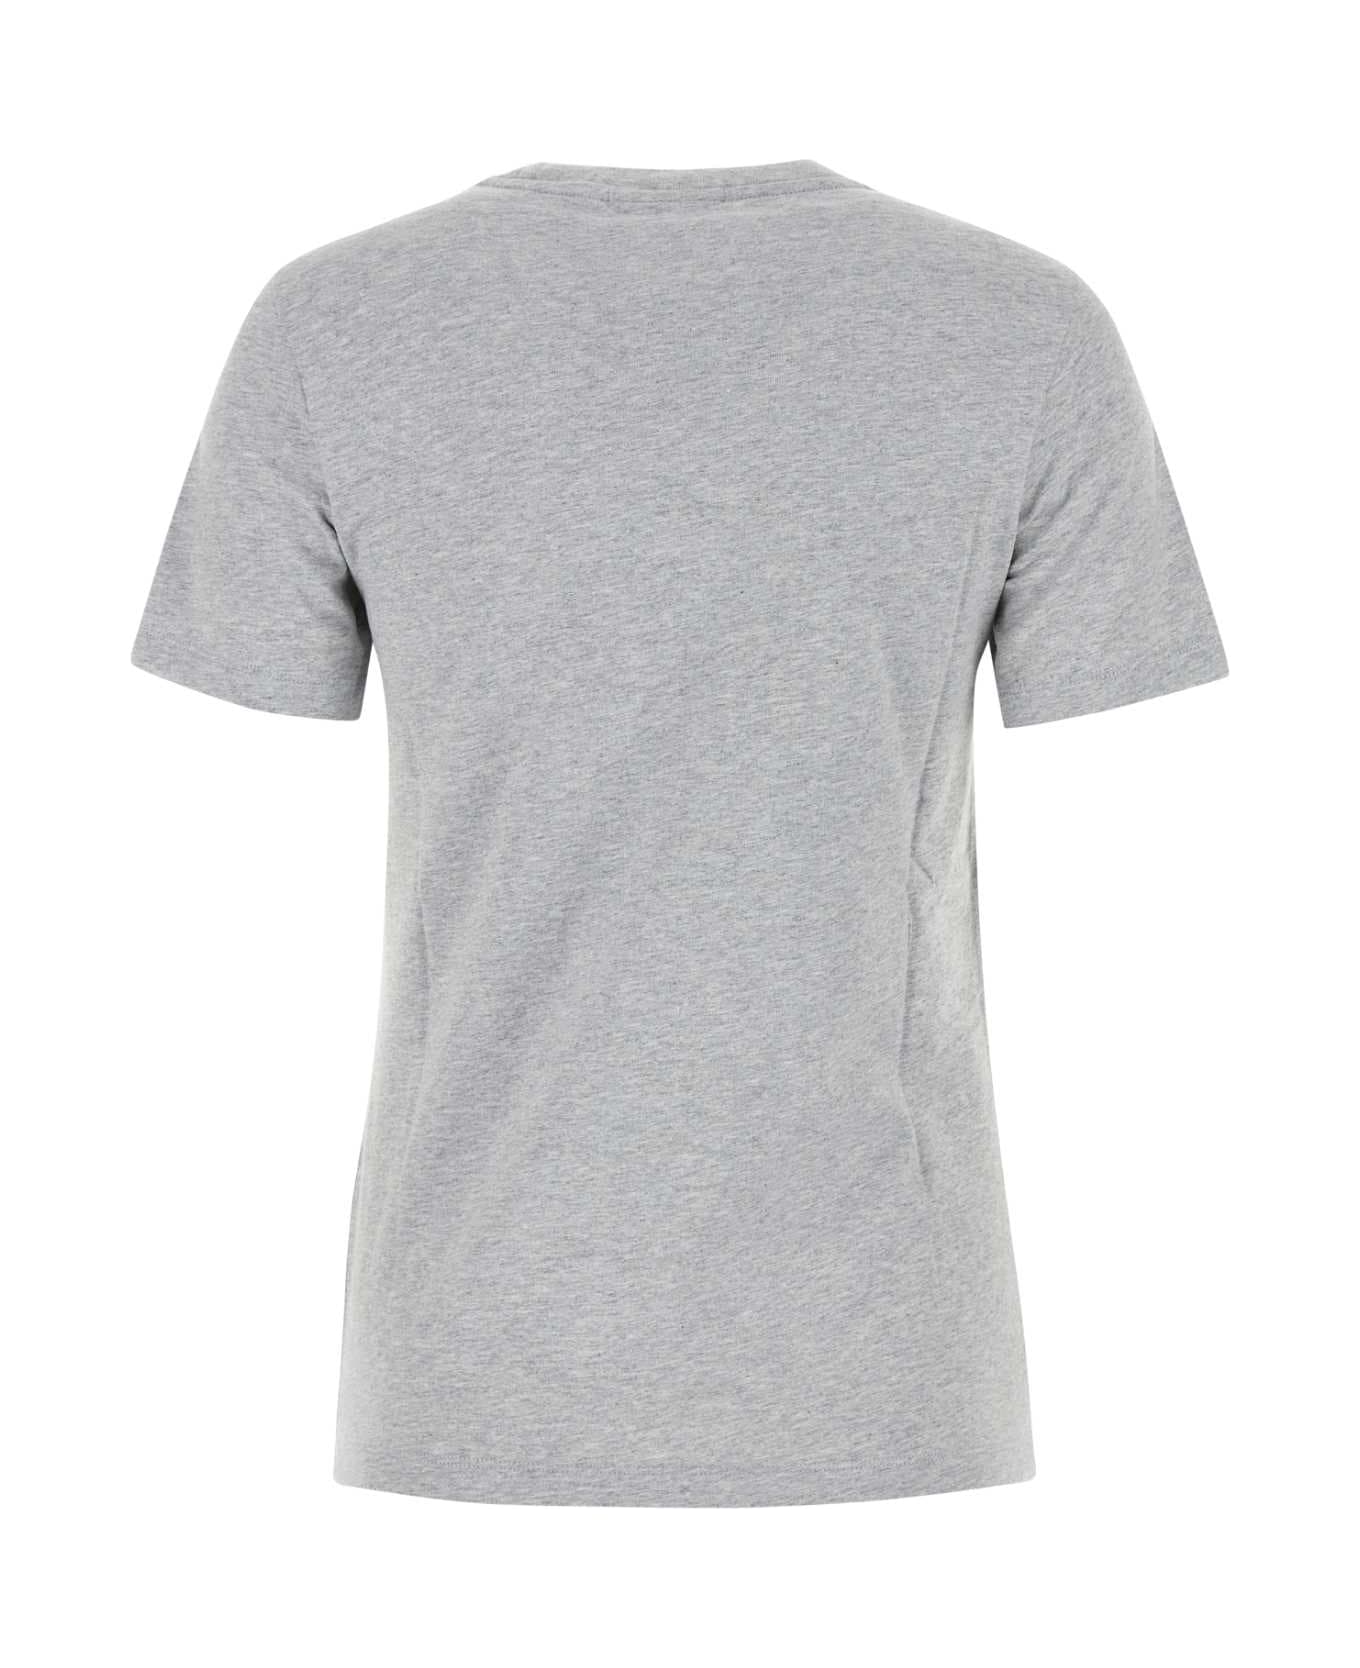 Maison Kitsuné Melange Grey Cotton T-shirt - LIGHTGREYMELANGE